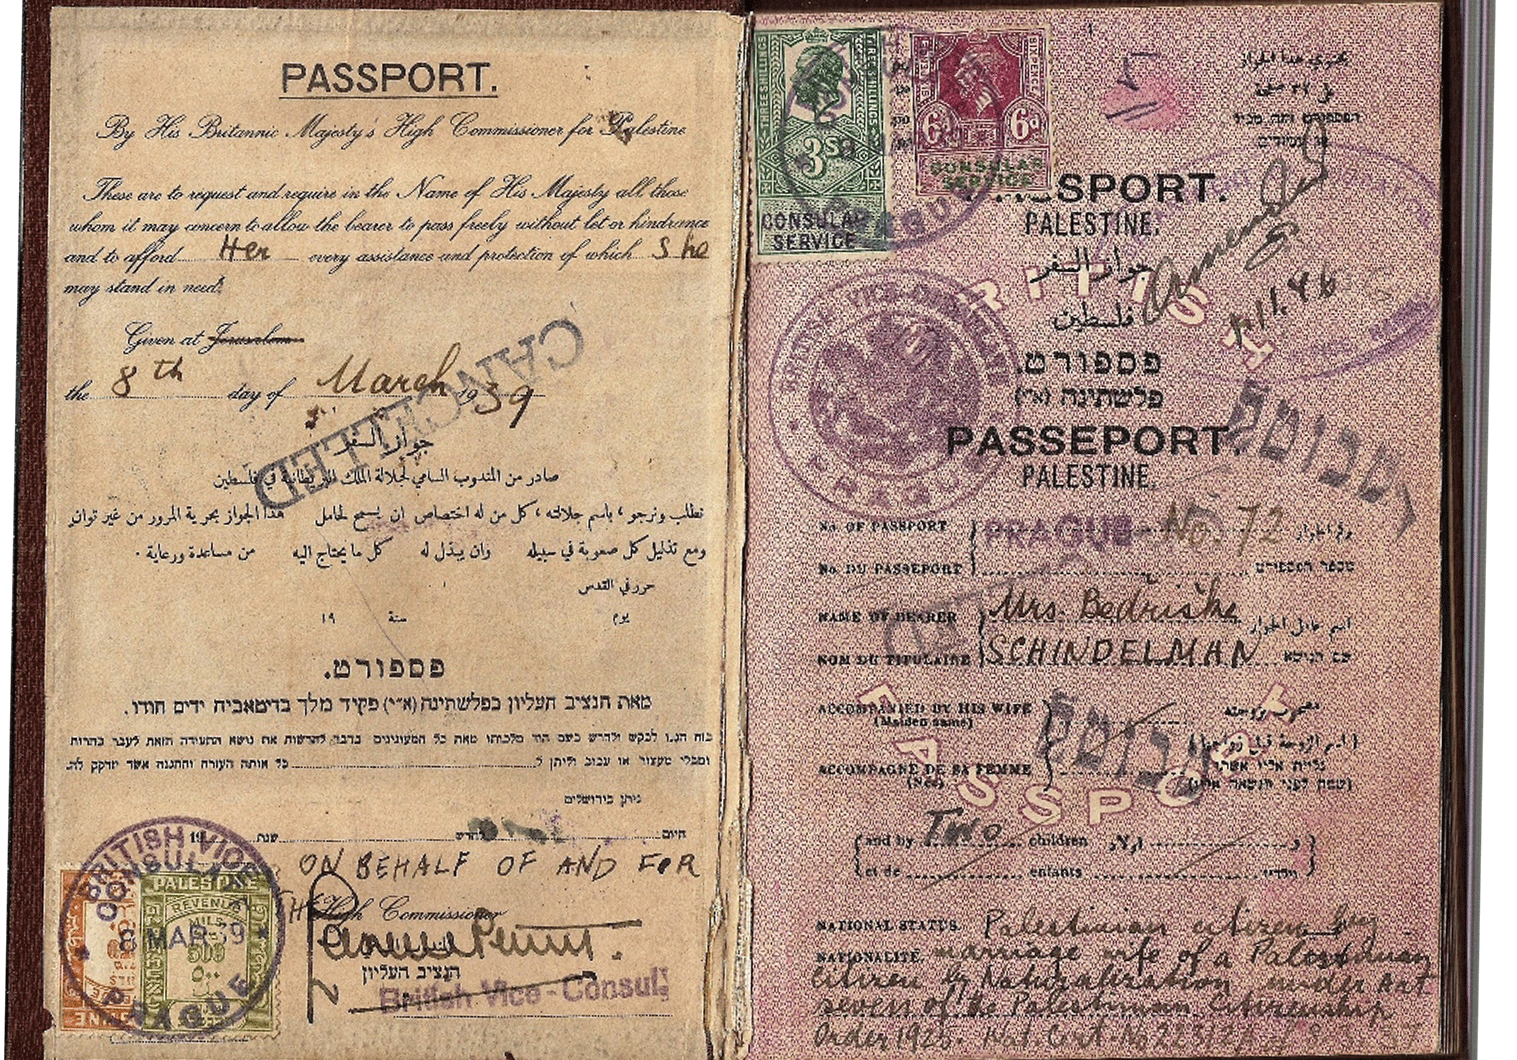 Mandate passport from Prague